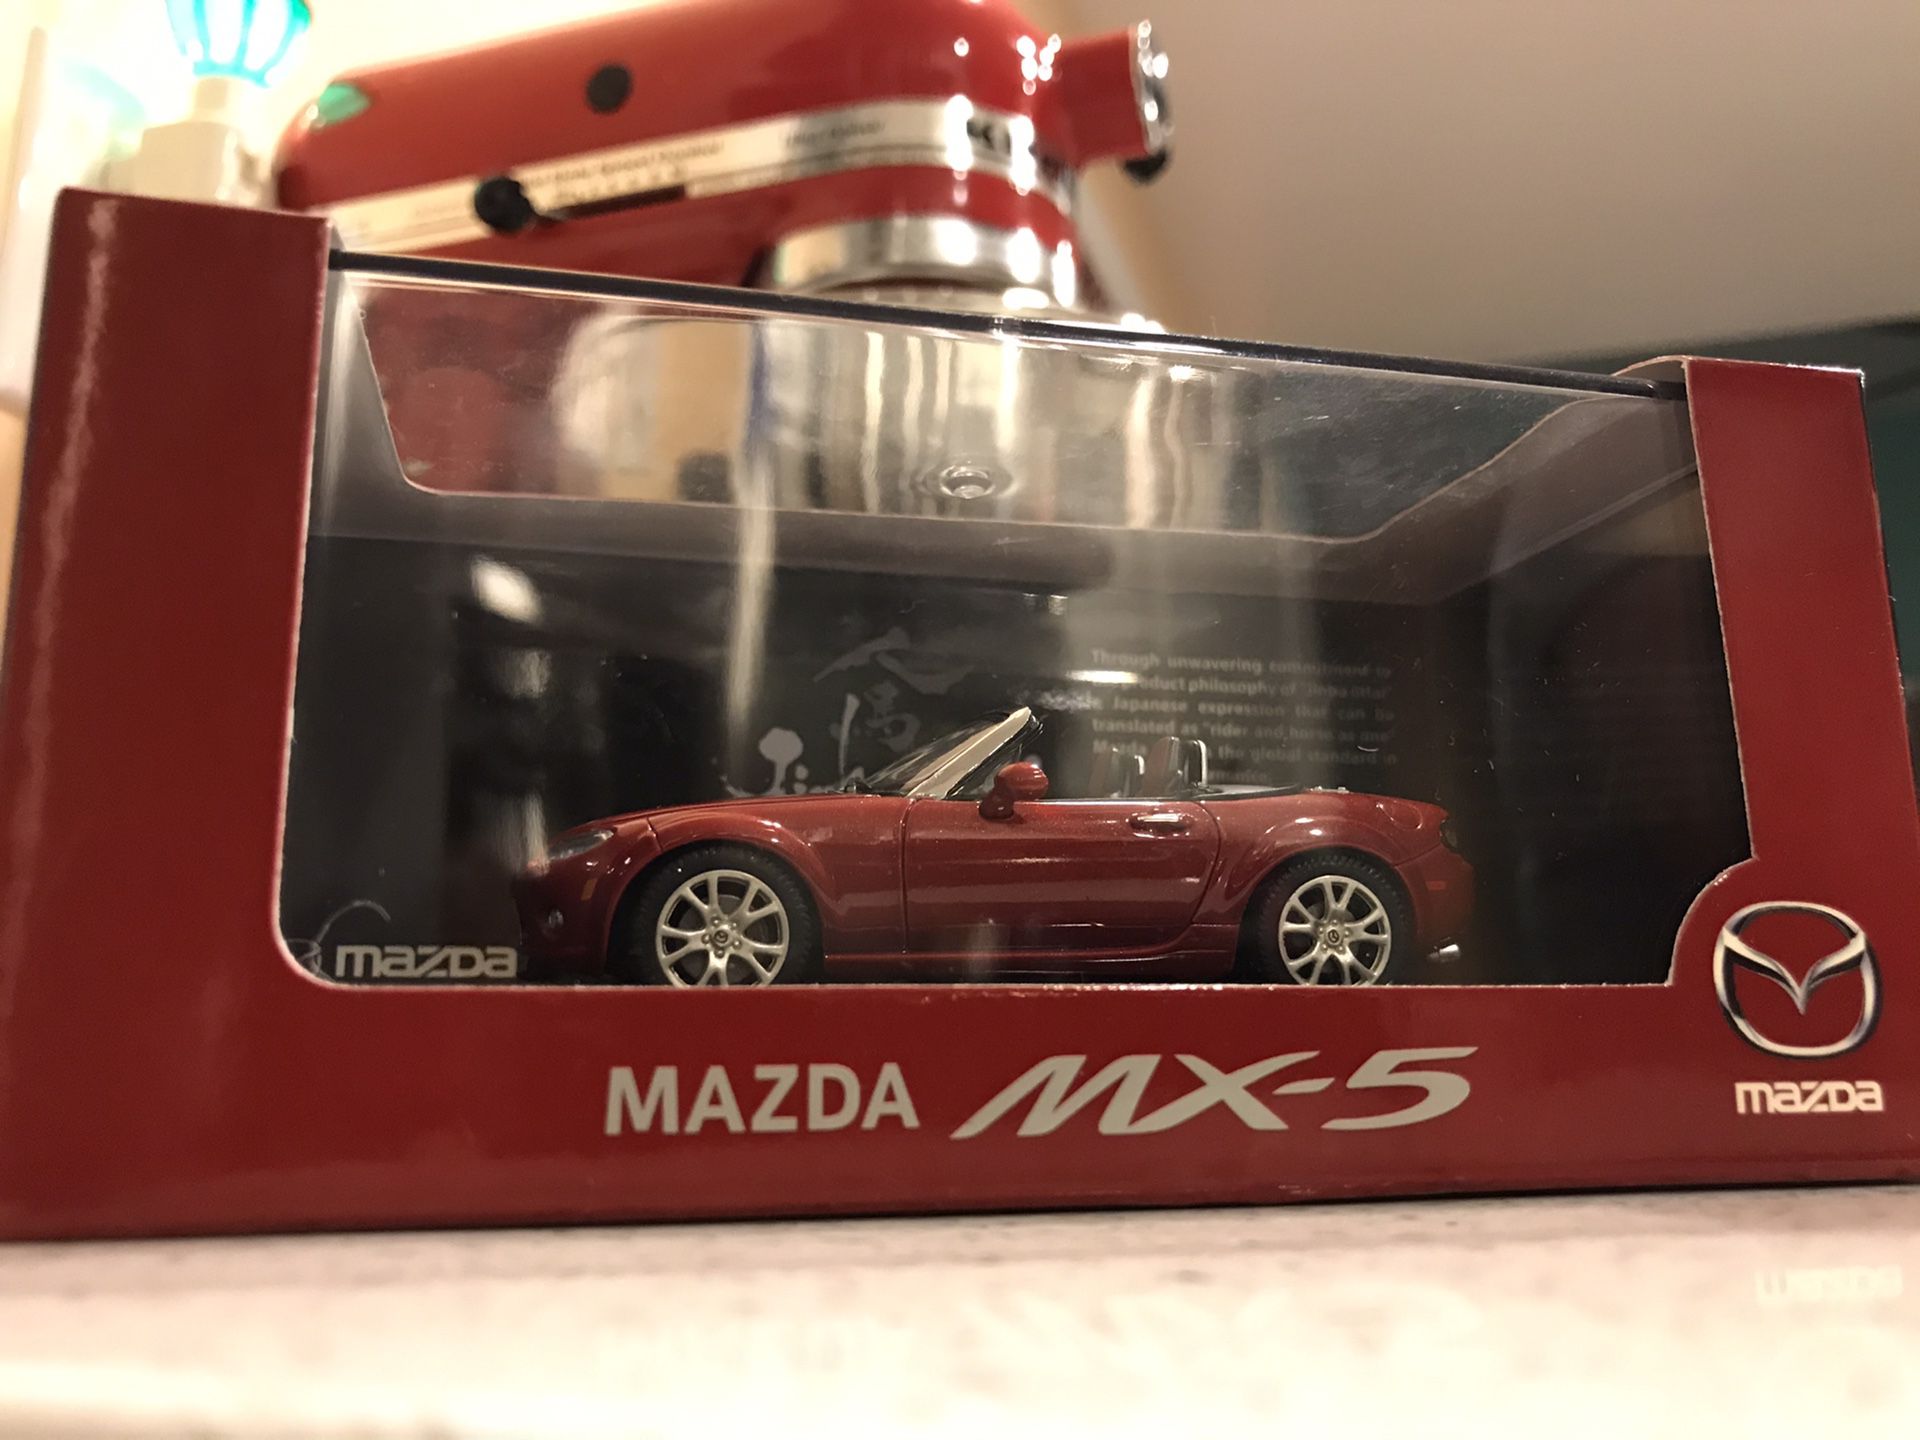 Mazda MX-5 3rd Generation Limited “Jinba Ittai” 1/43 Scale